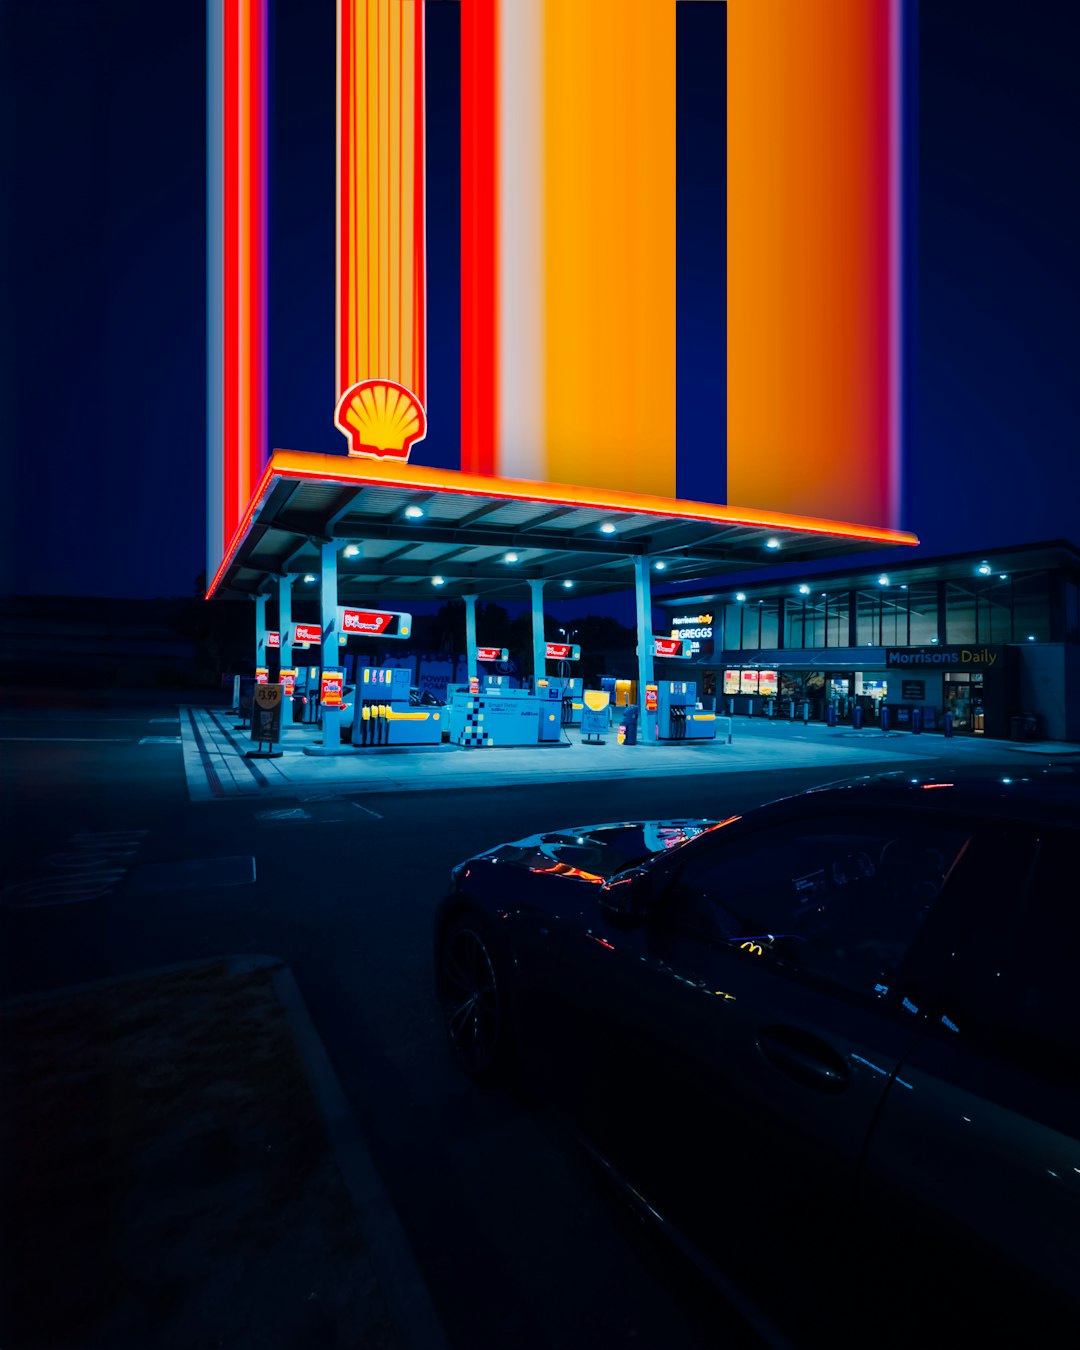 Shell Petrol station - Photoshop experiment